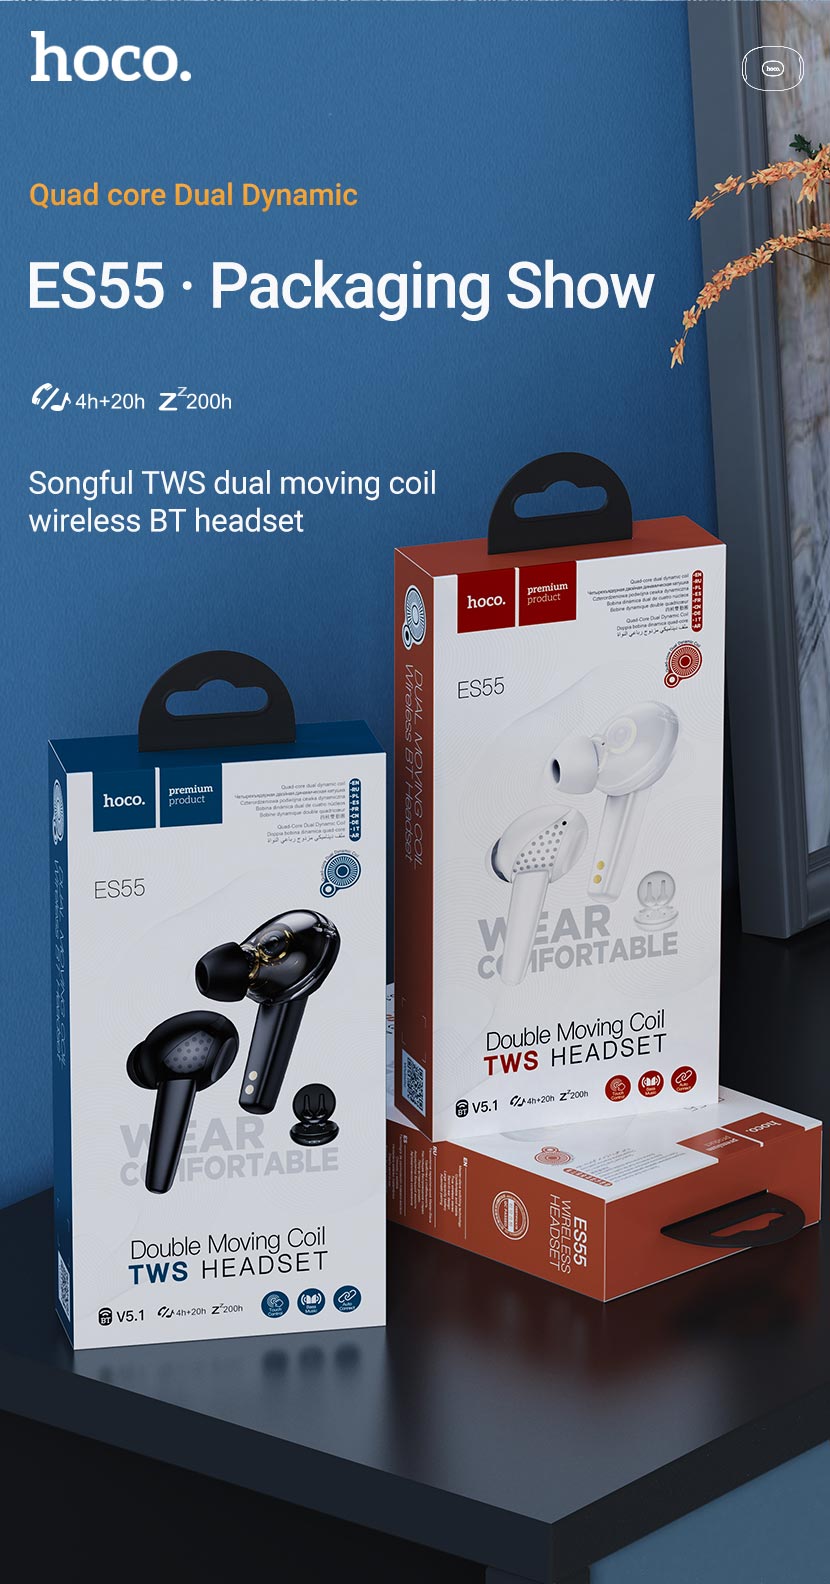 hoco news es55 songful tws dual moving coil wireless bt headset package en